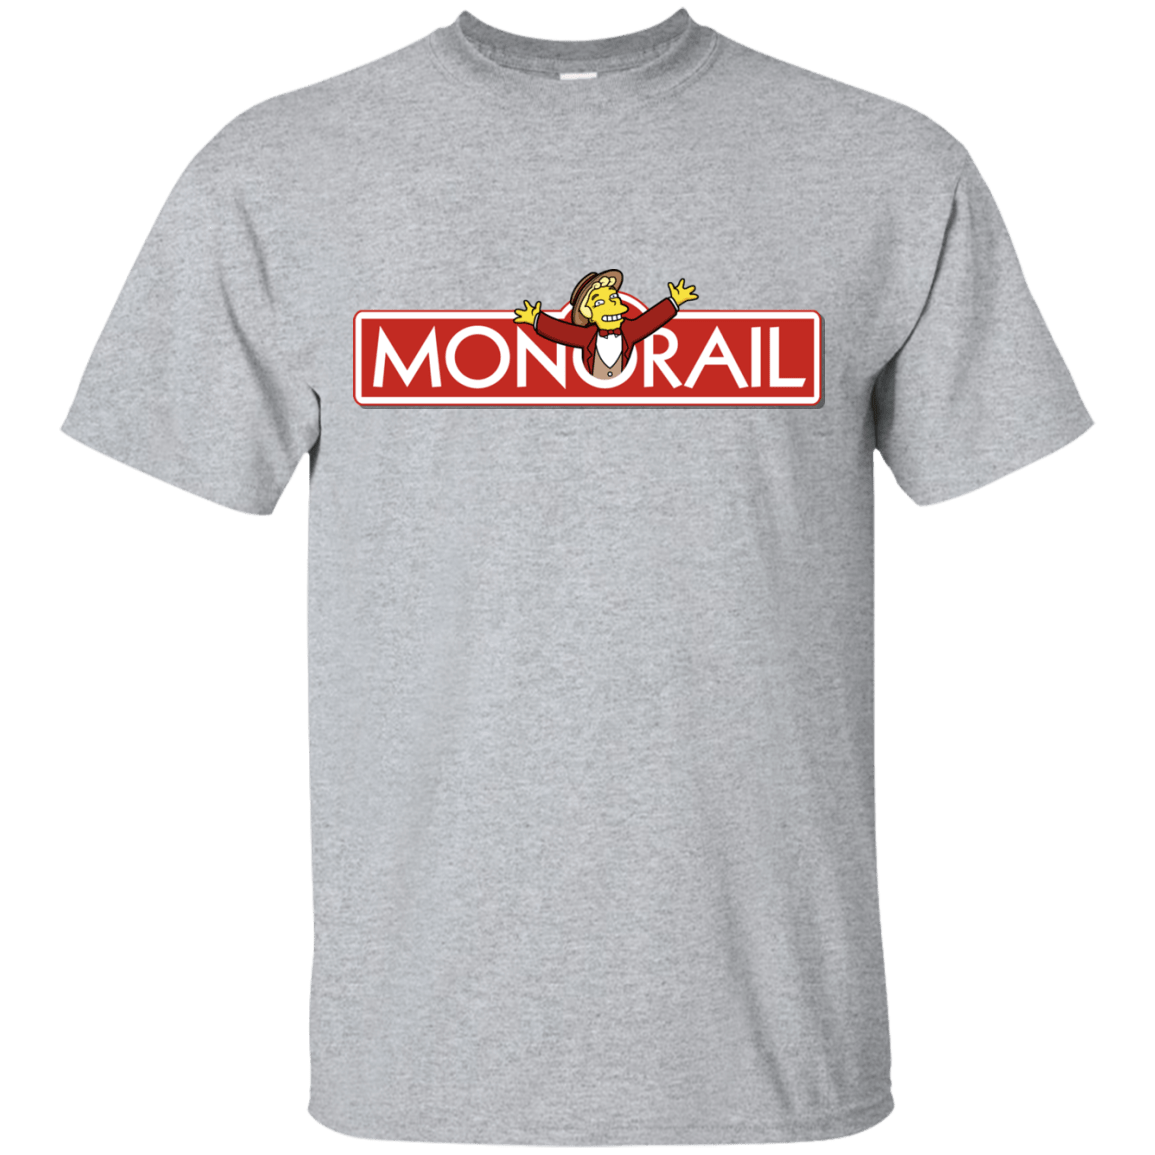 T-Shirts Sport Grey / S Monorail T-Shirt